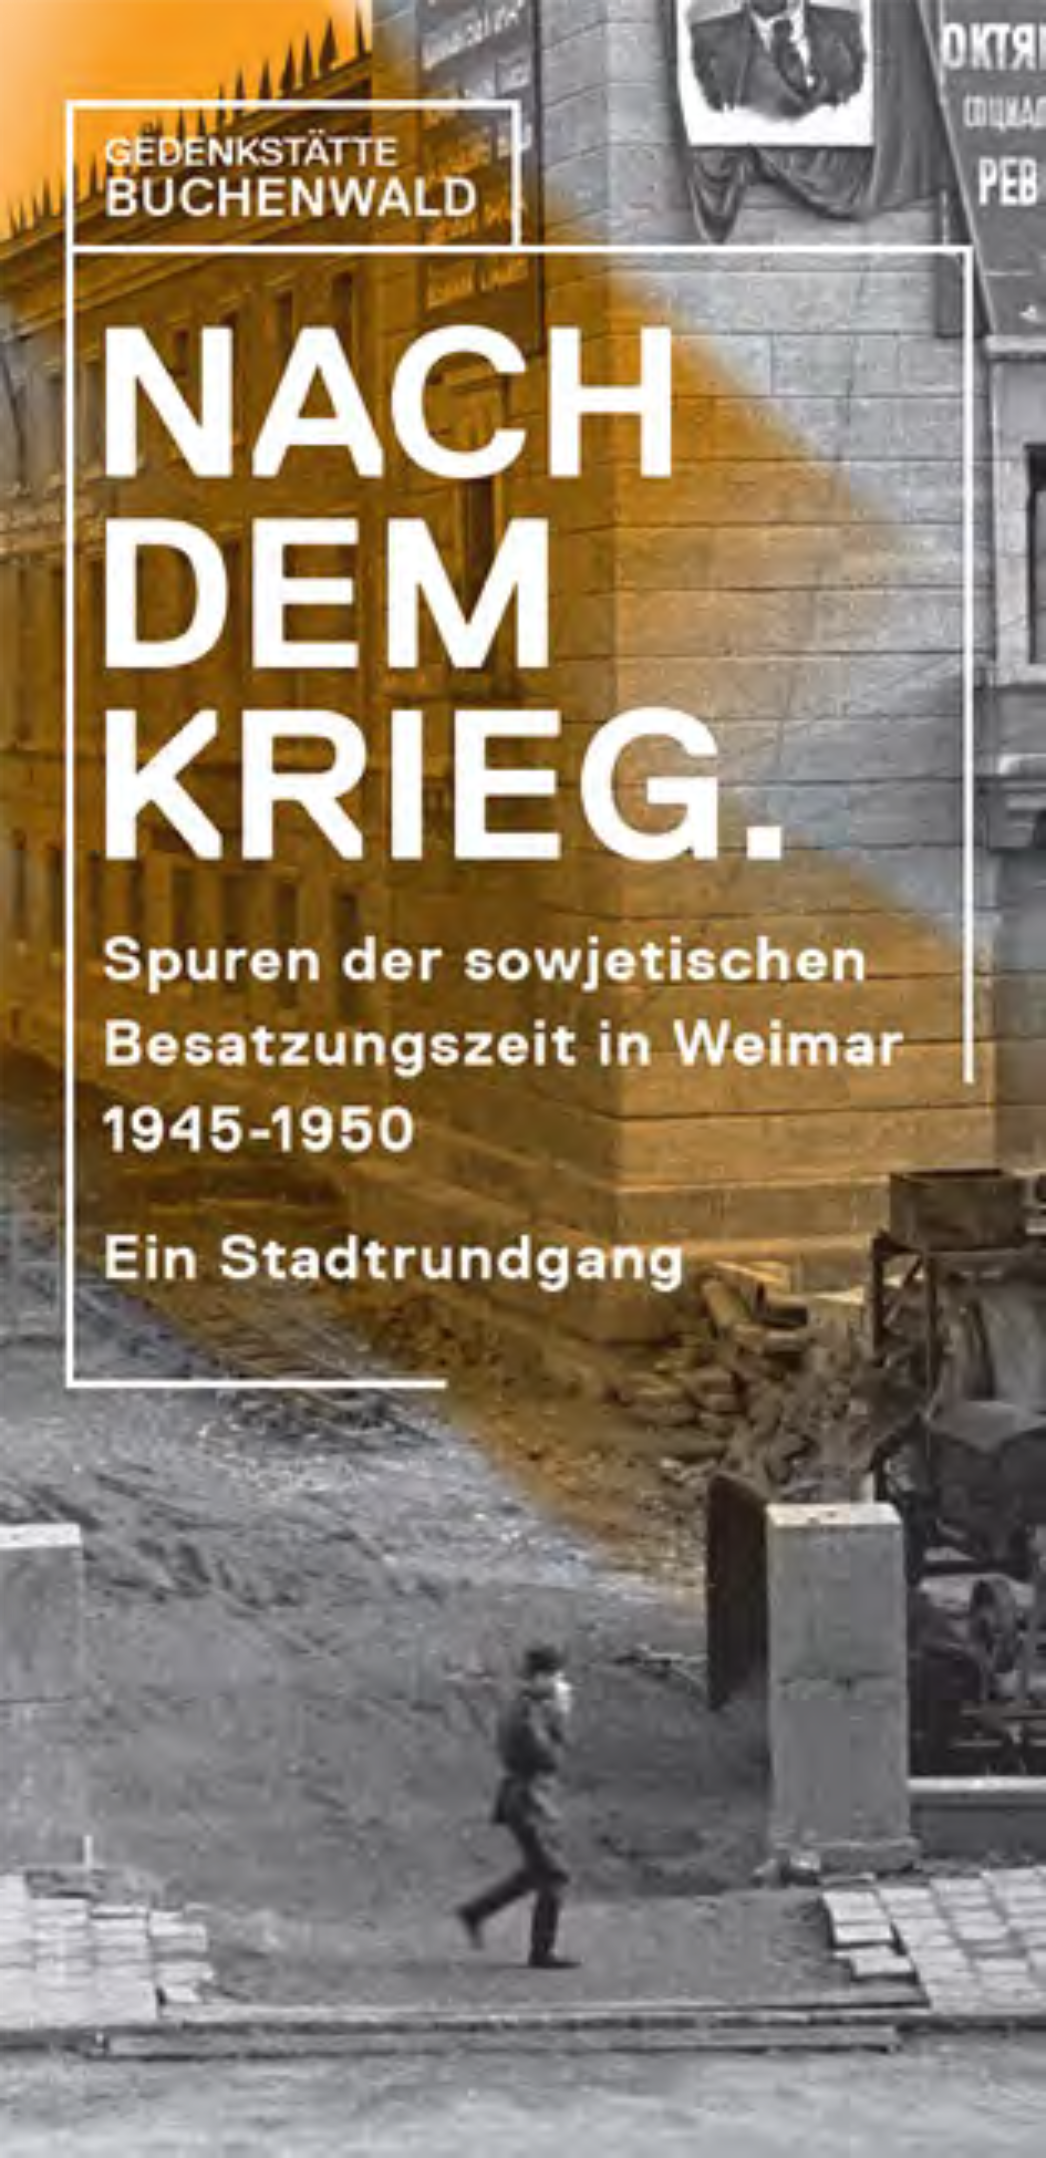 Cover der Stadtrundgangs-Broschüre "Nach dem Krieg"